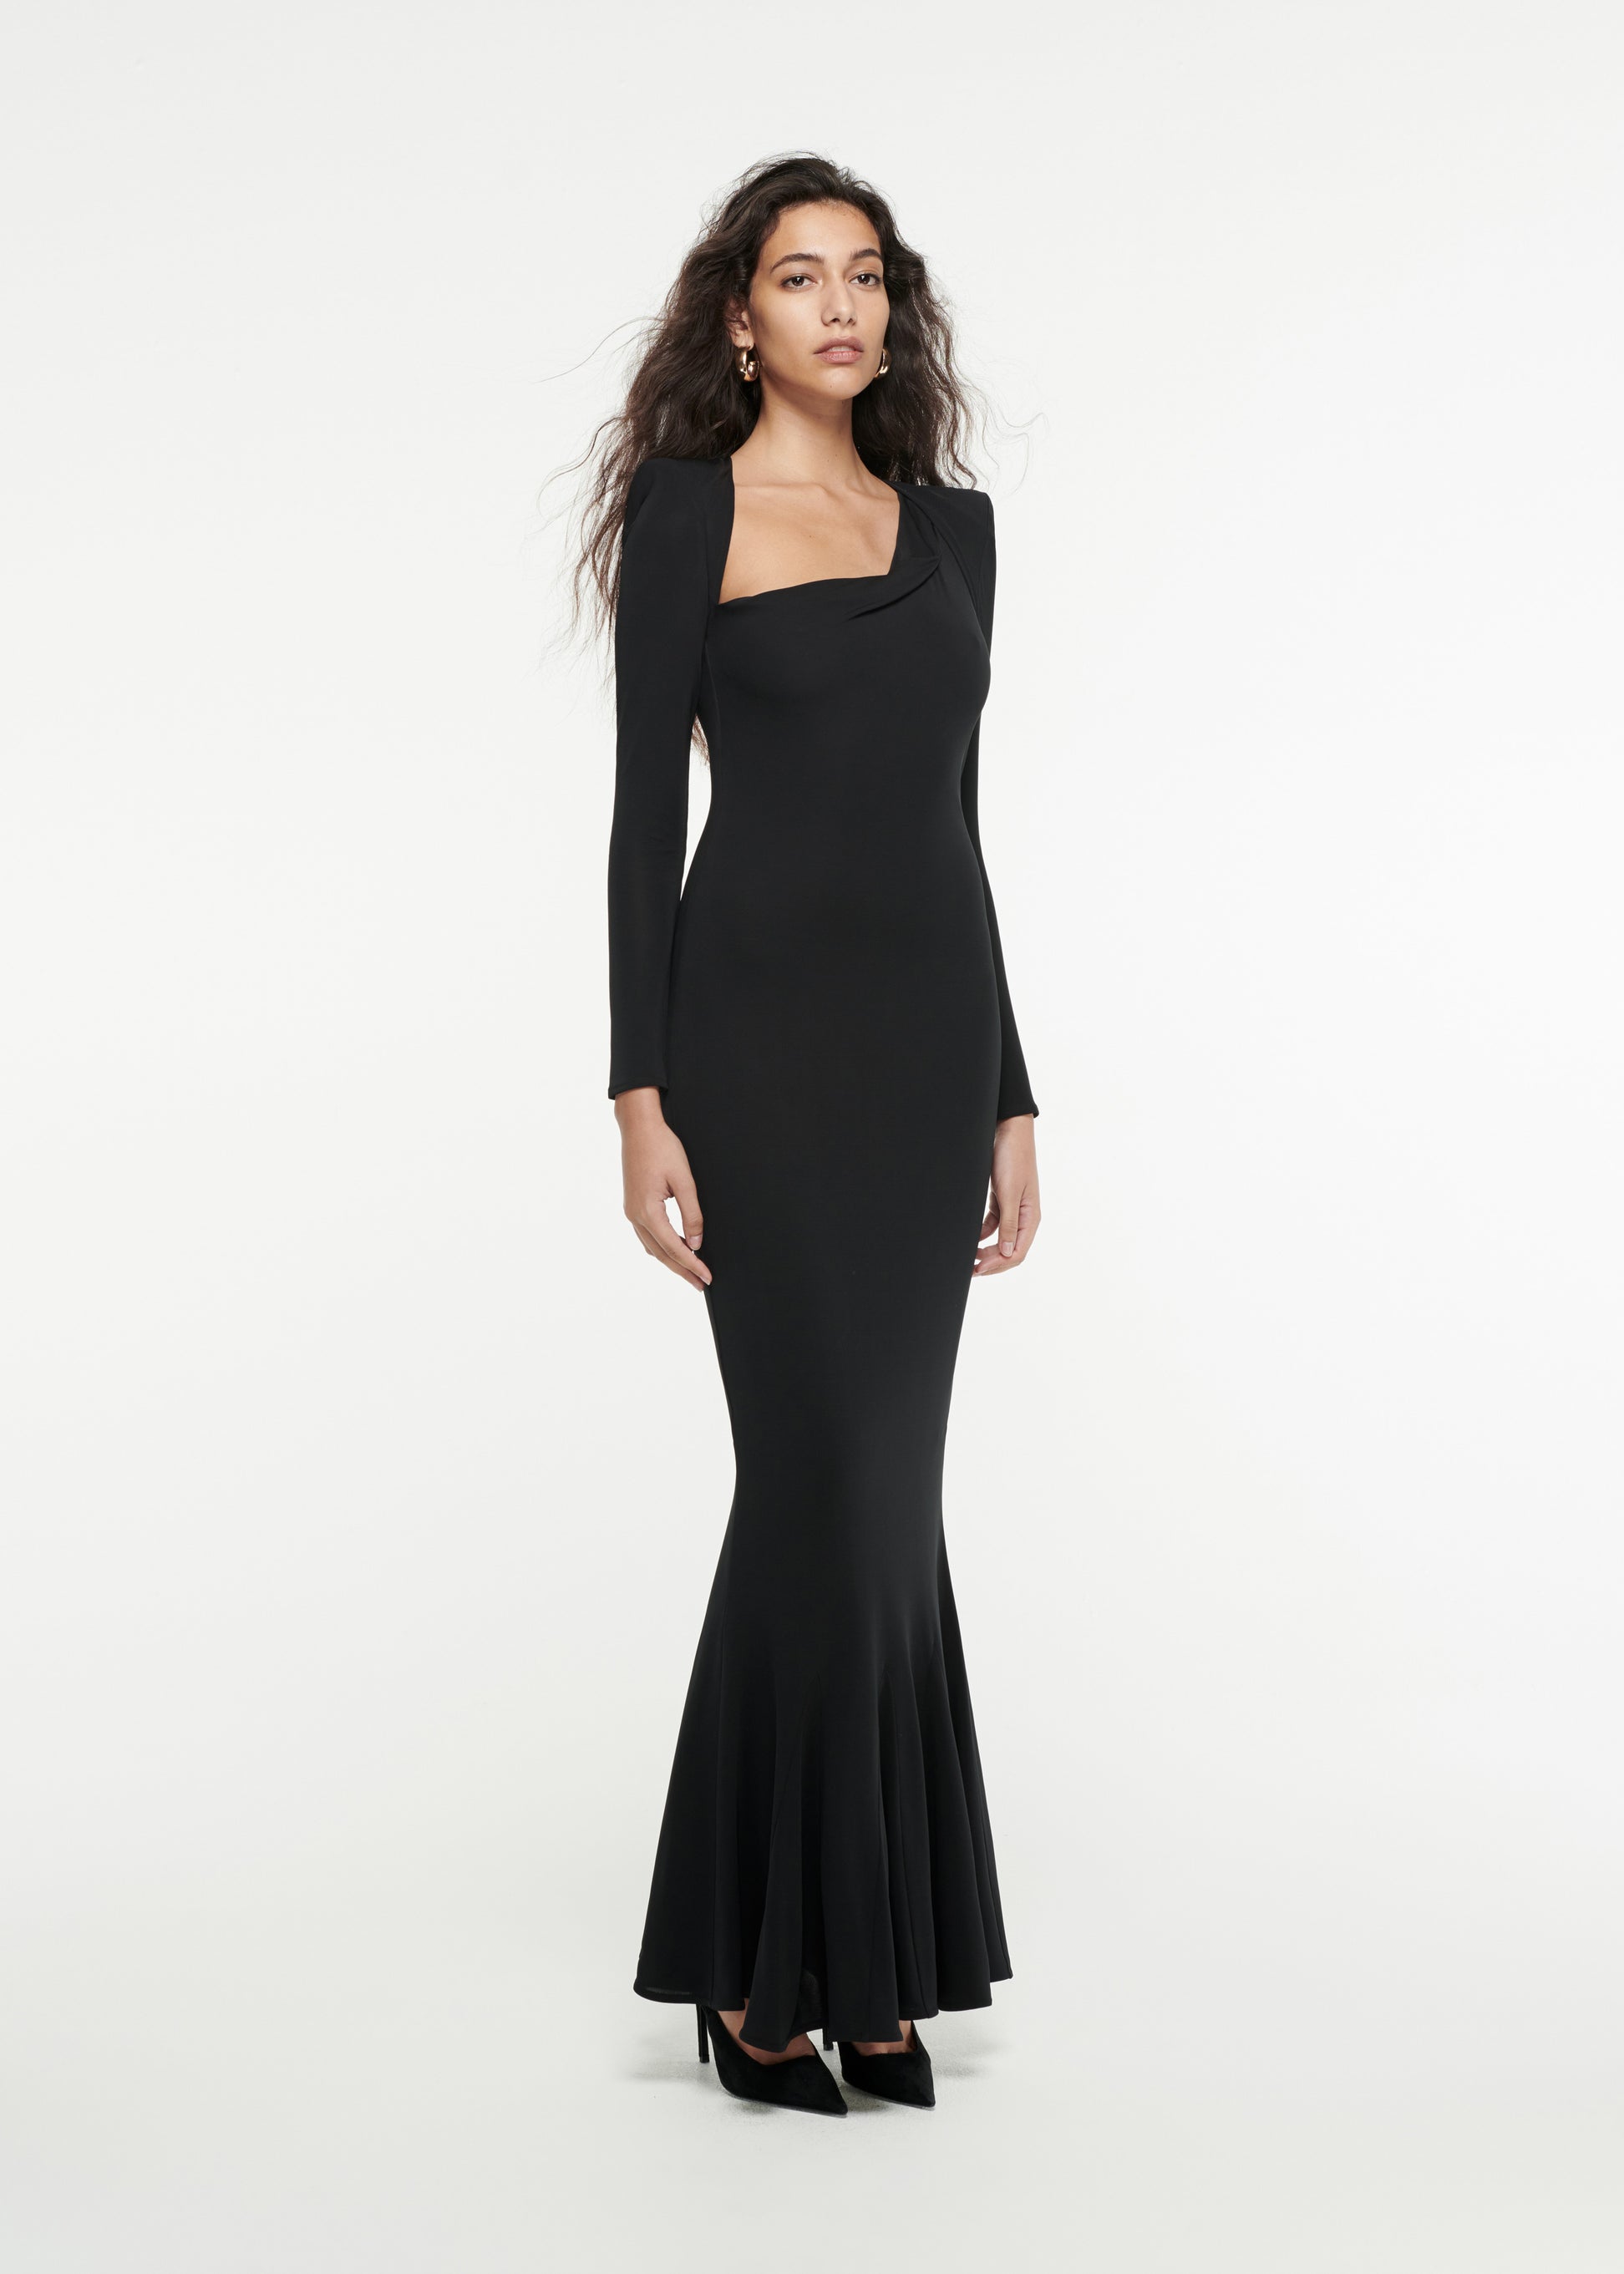 Woman wearing the Long Sleeve Asymmetric Gown in Black 